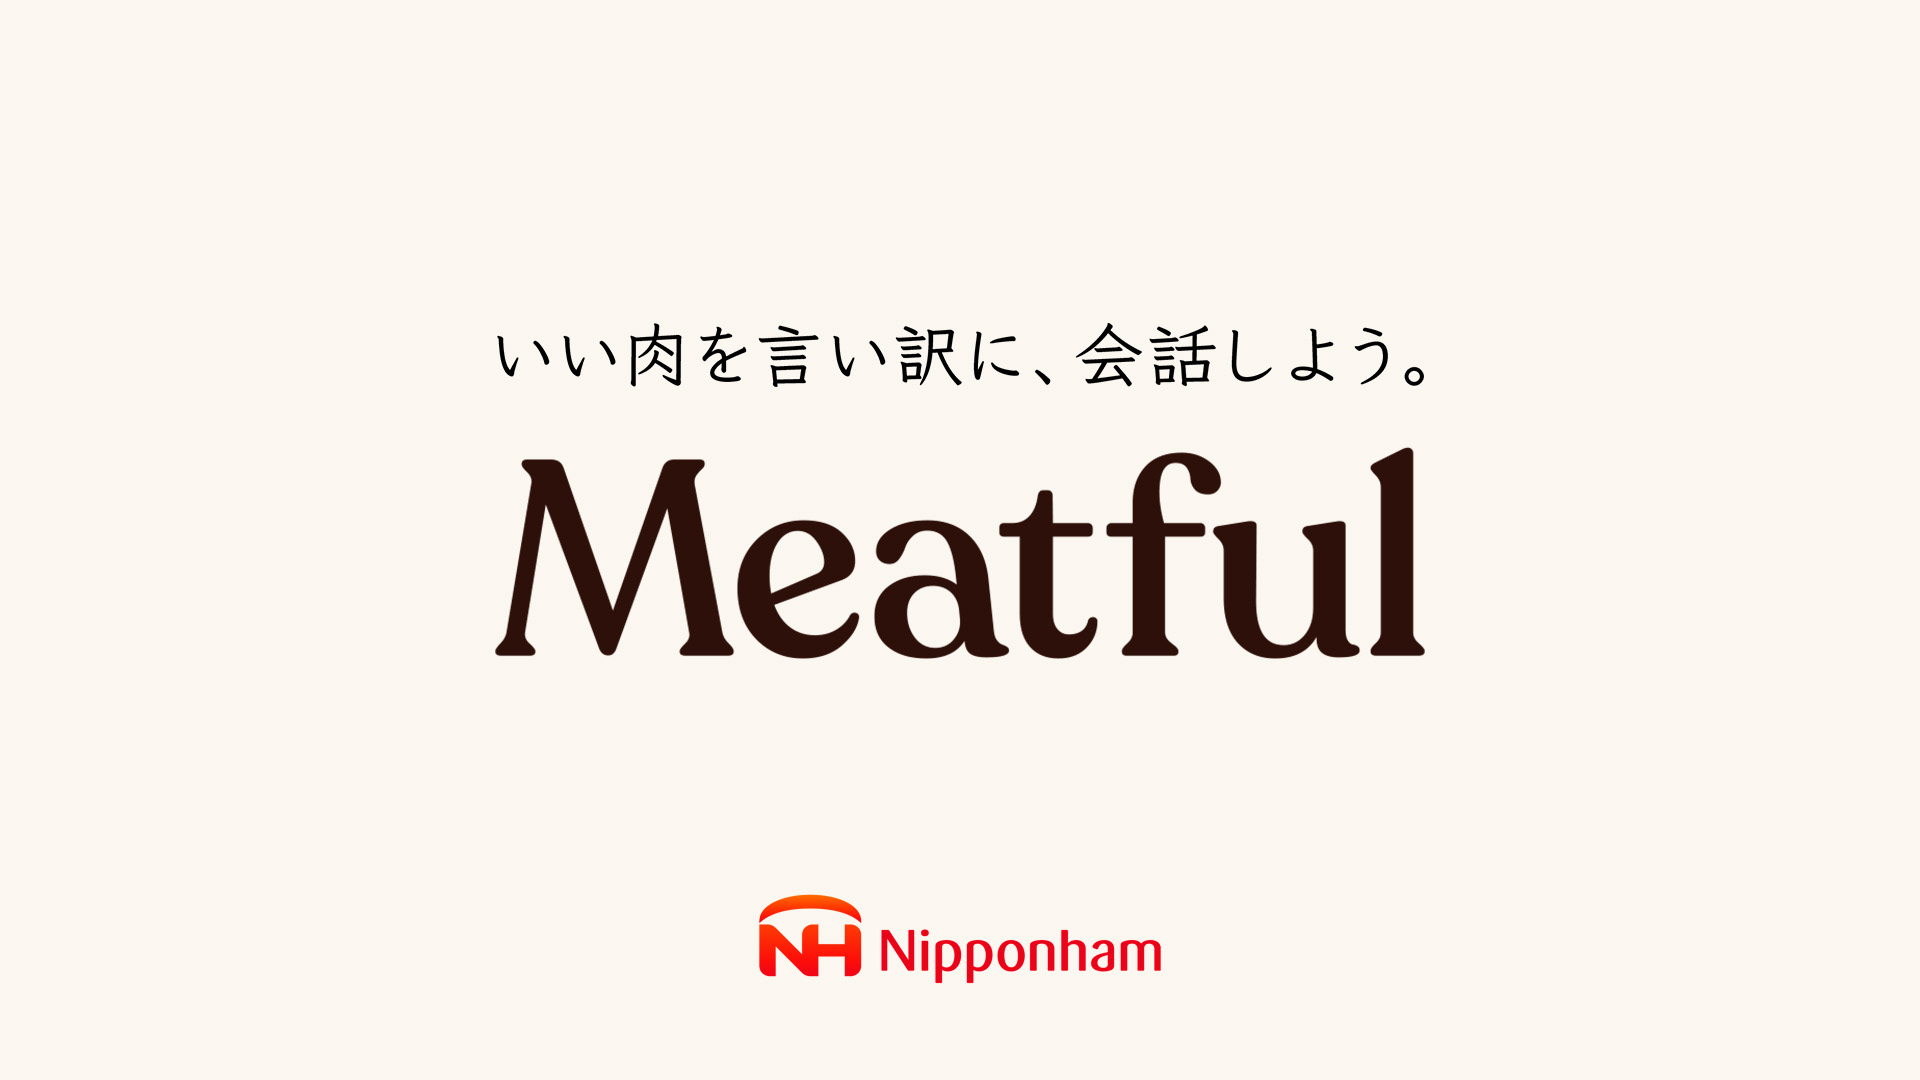 #MeatfulTime
いい肉を言い訳に、会話しよう 日本ハム株式会社